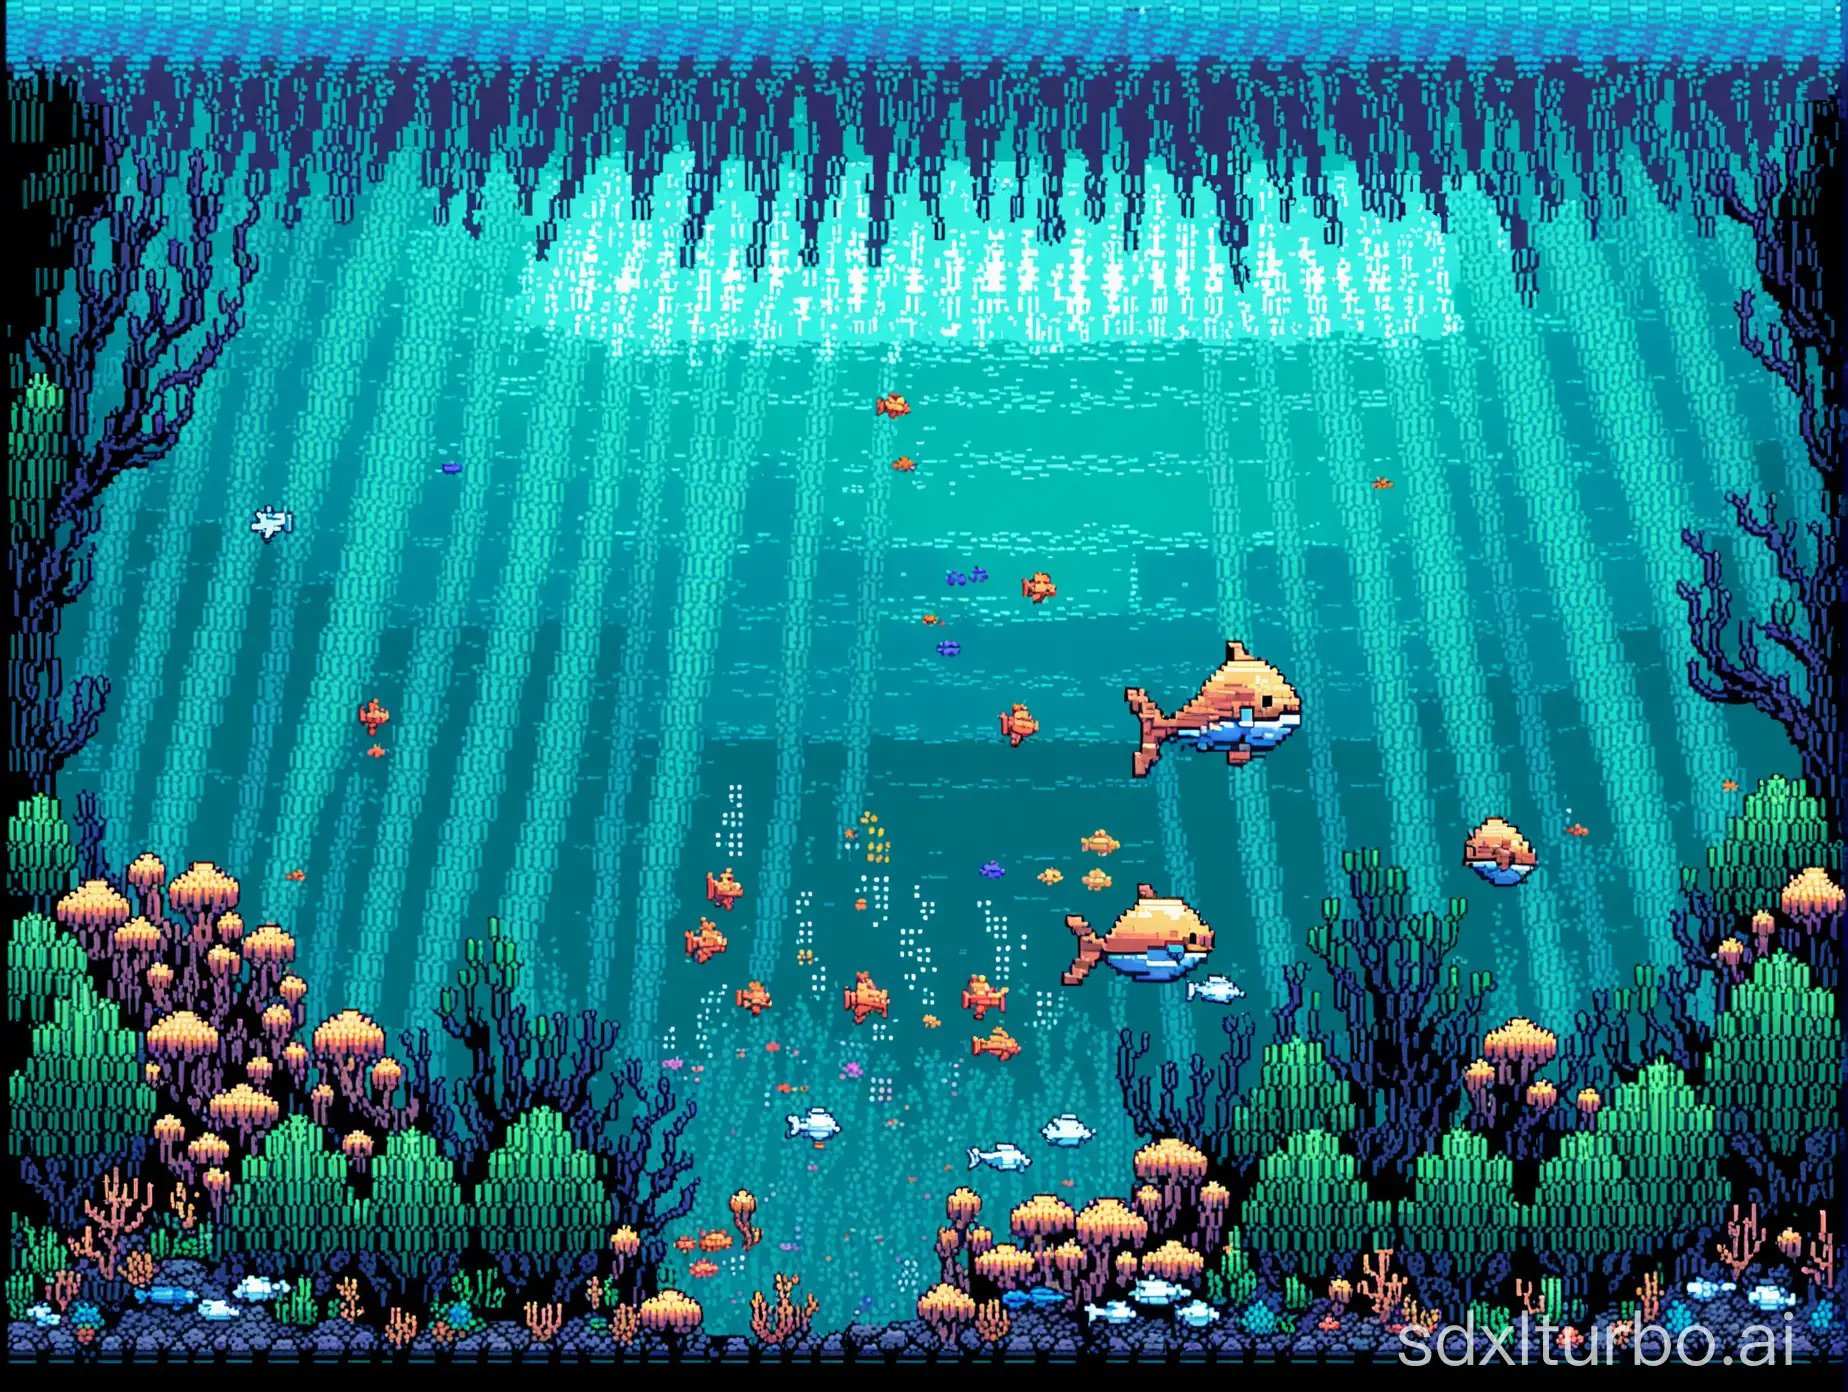 Colorful-Pixel-Art-Underwater-Scene-with-Marine-Life